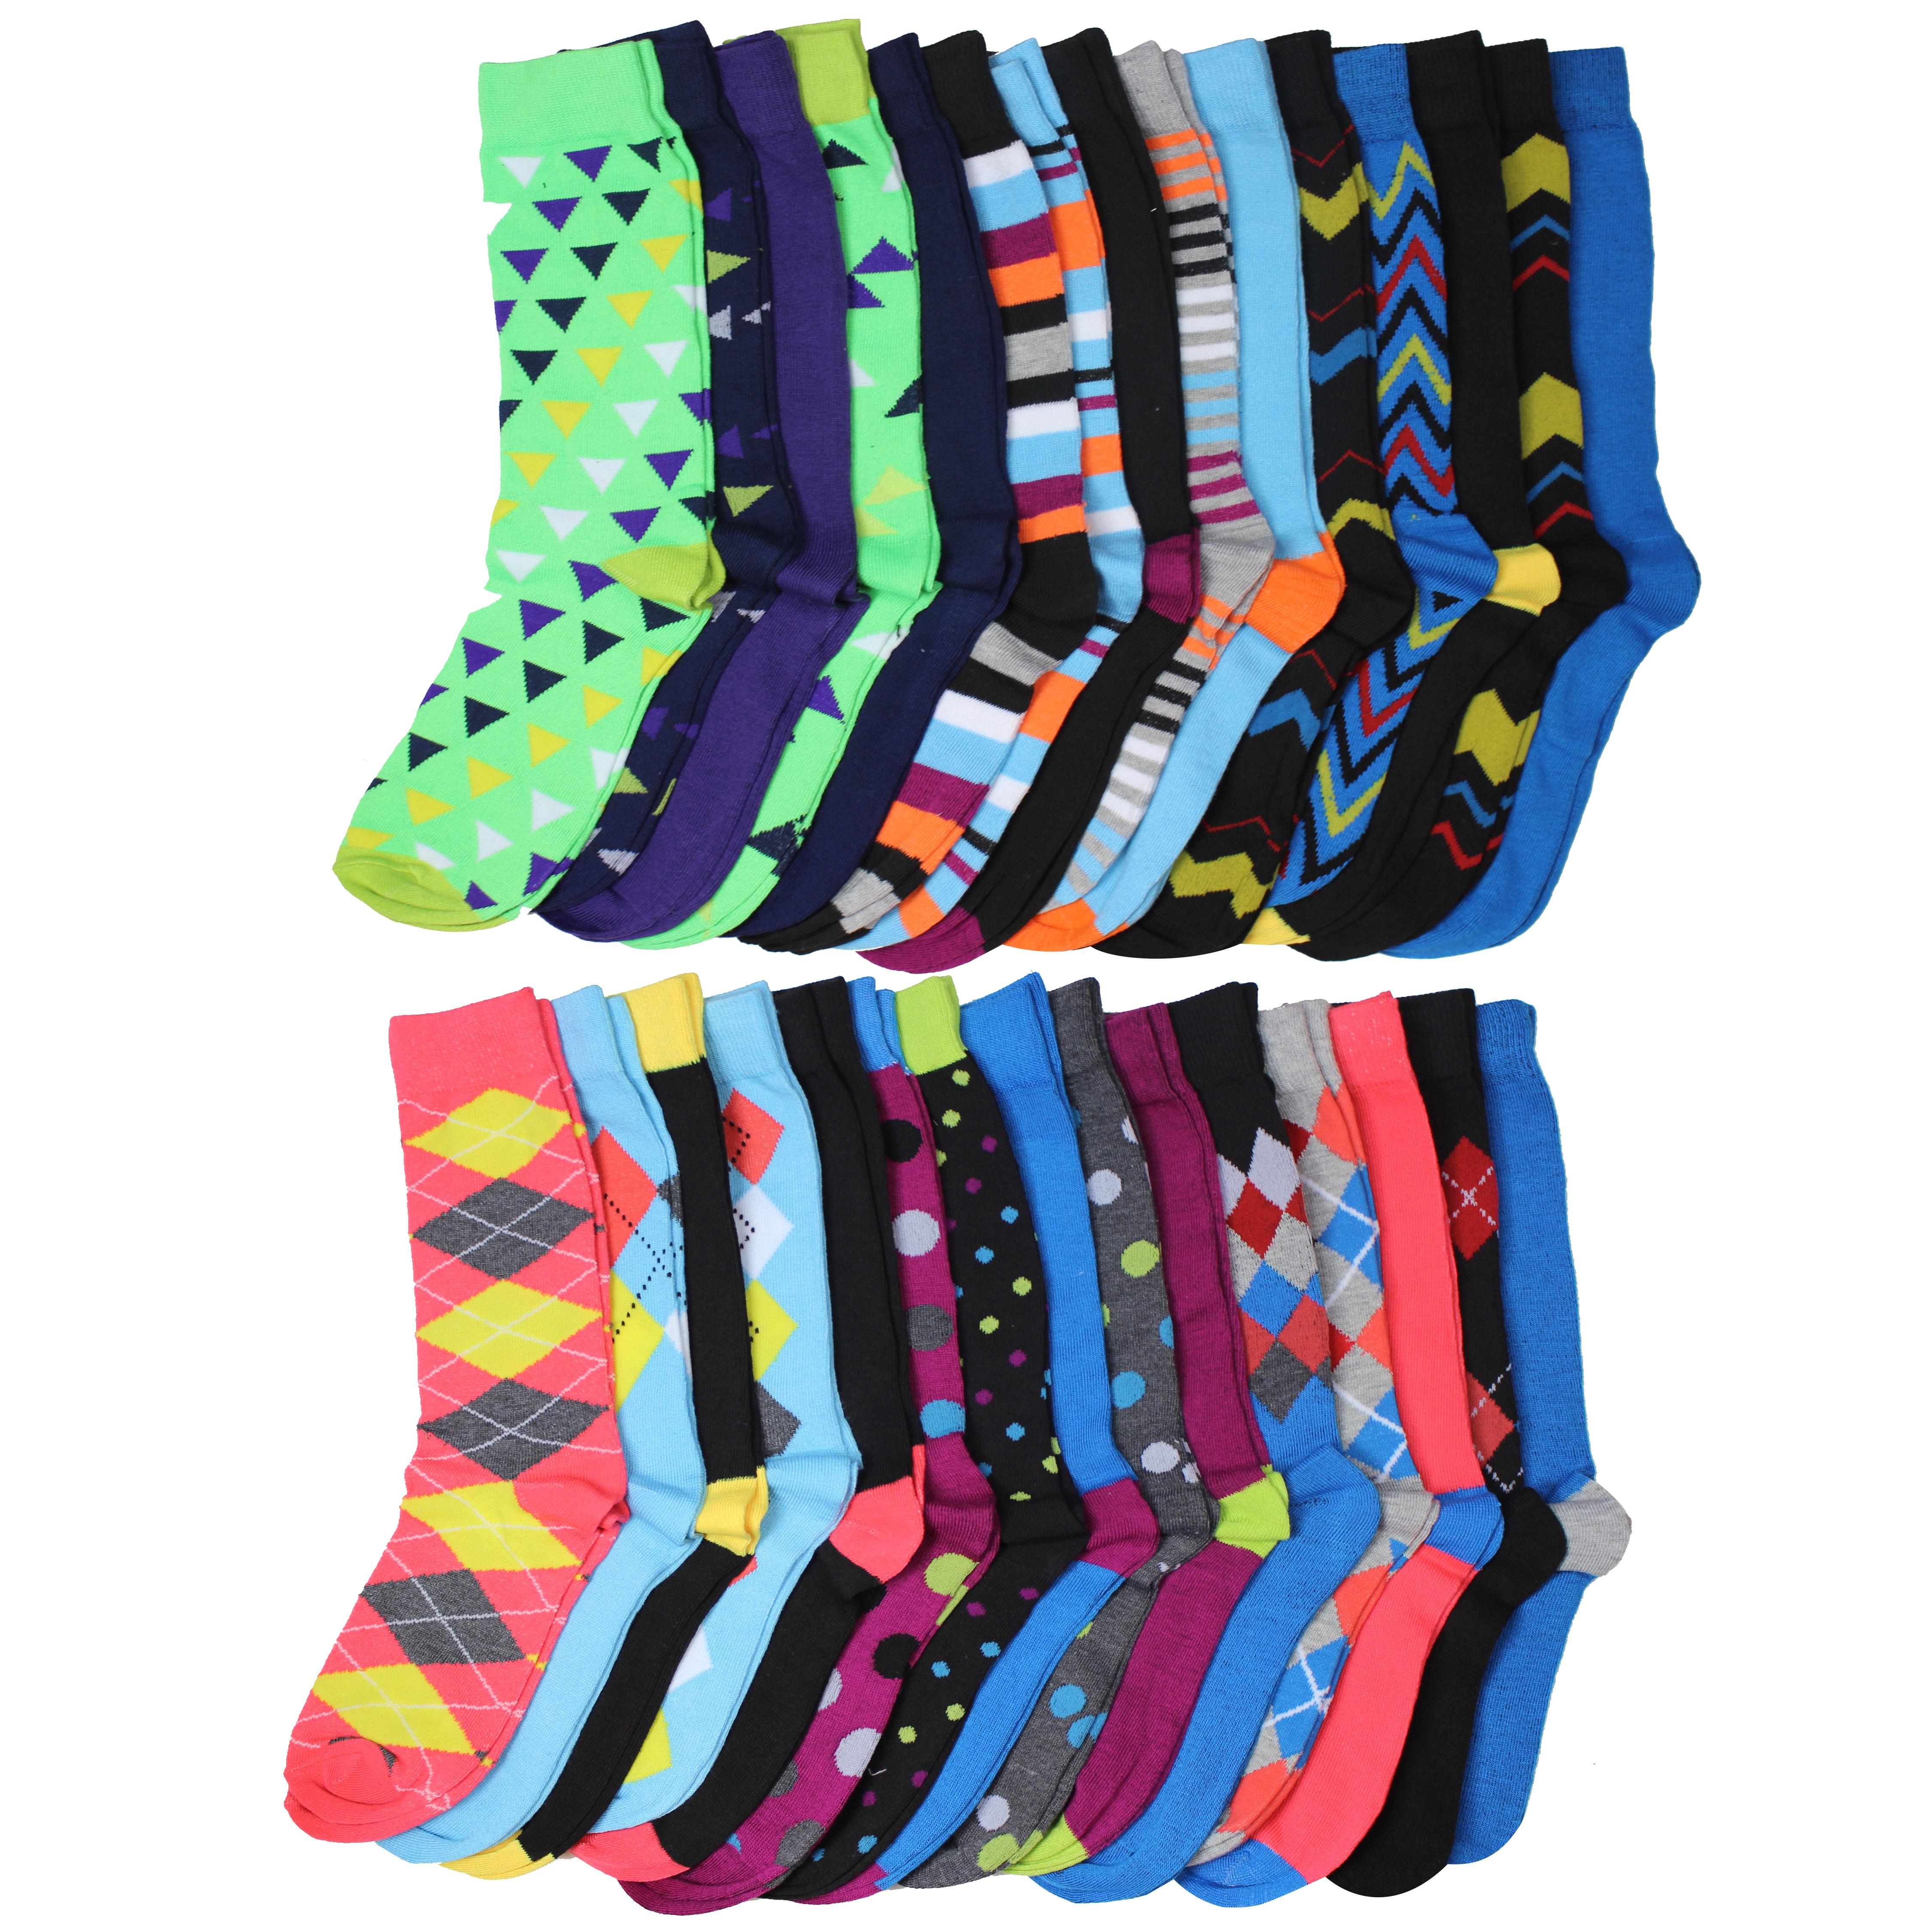 Assortment of crazy socks